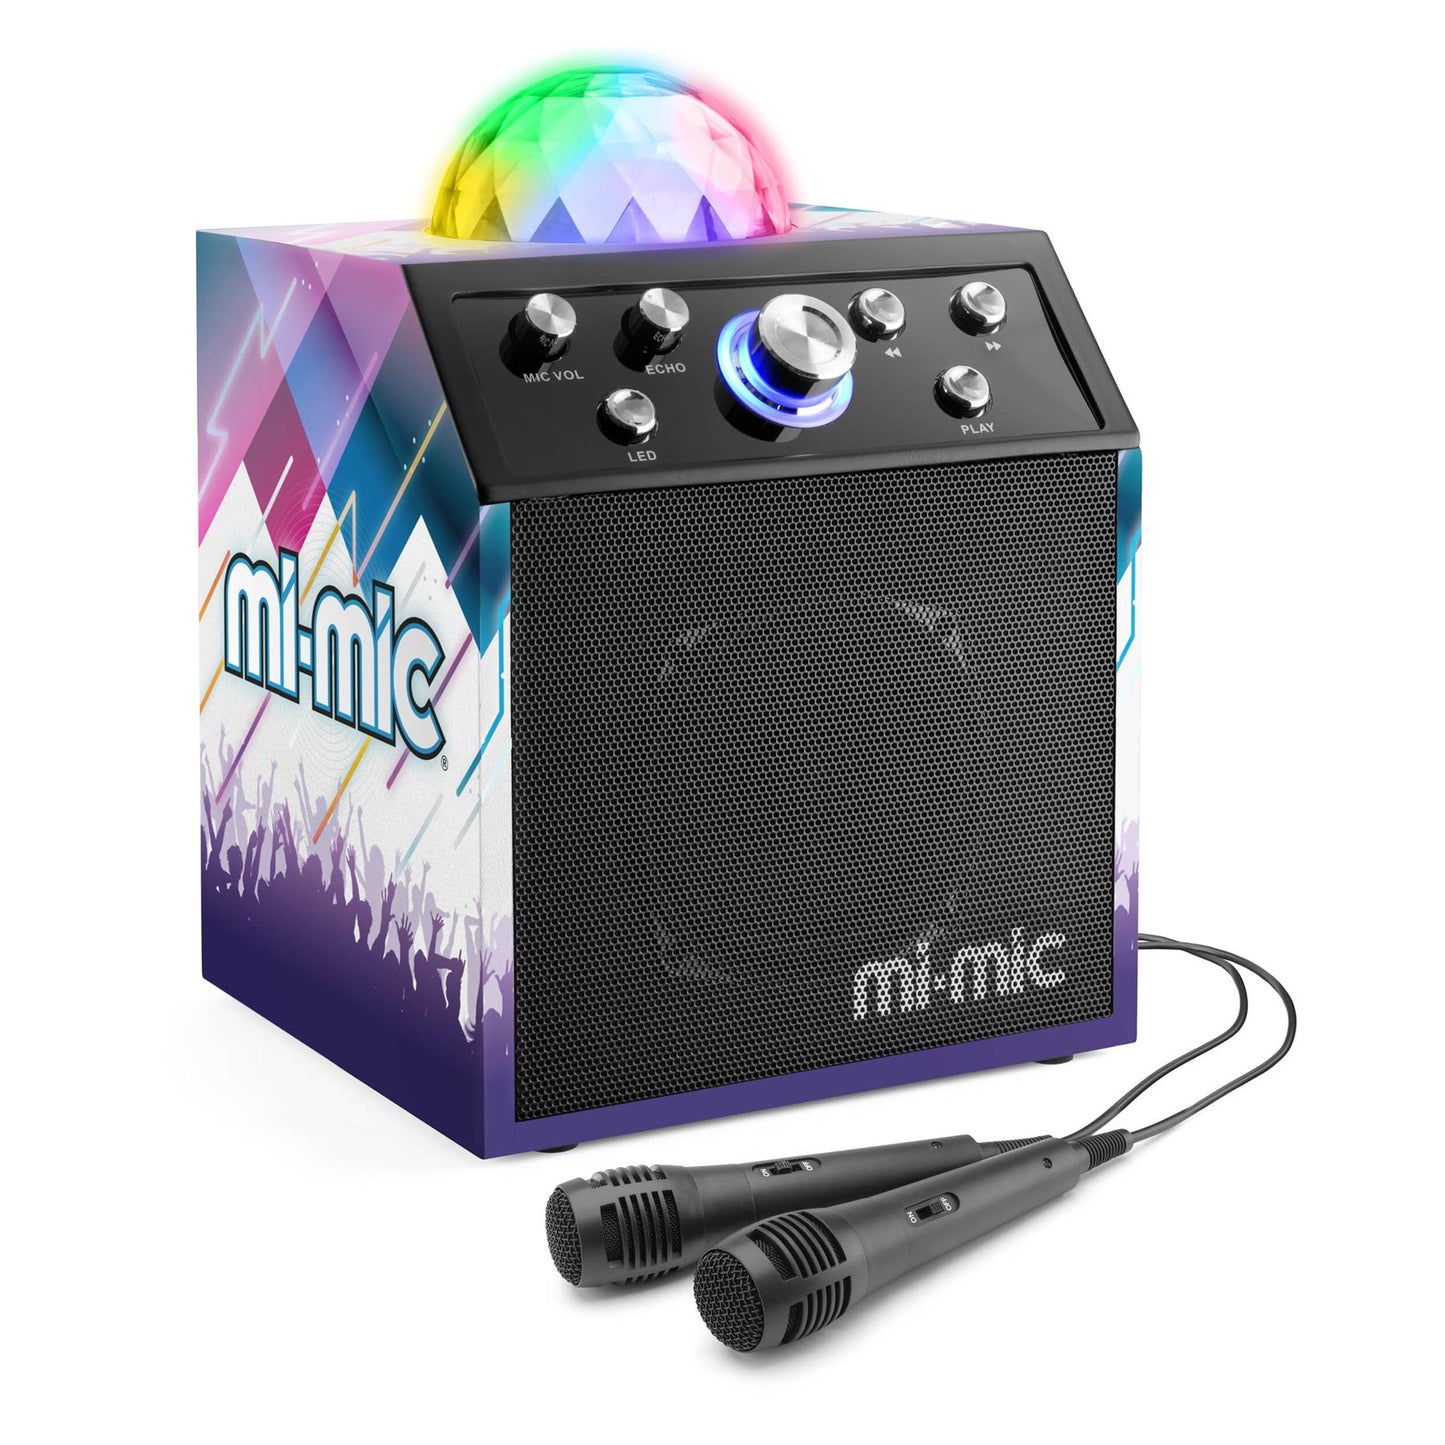 Mi-Mic Karaoke Disco Cube